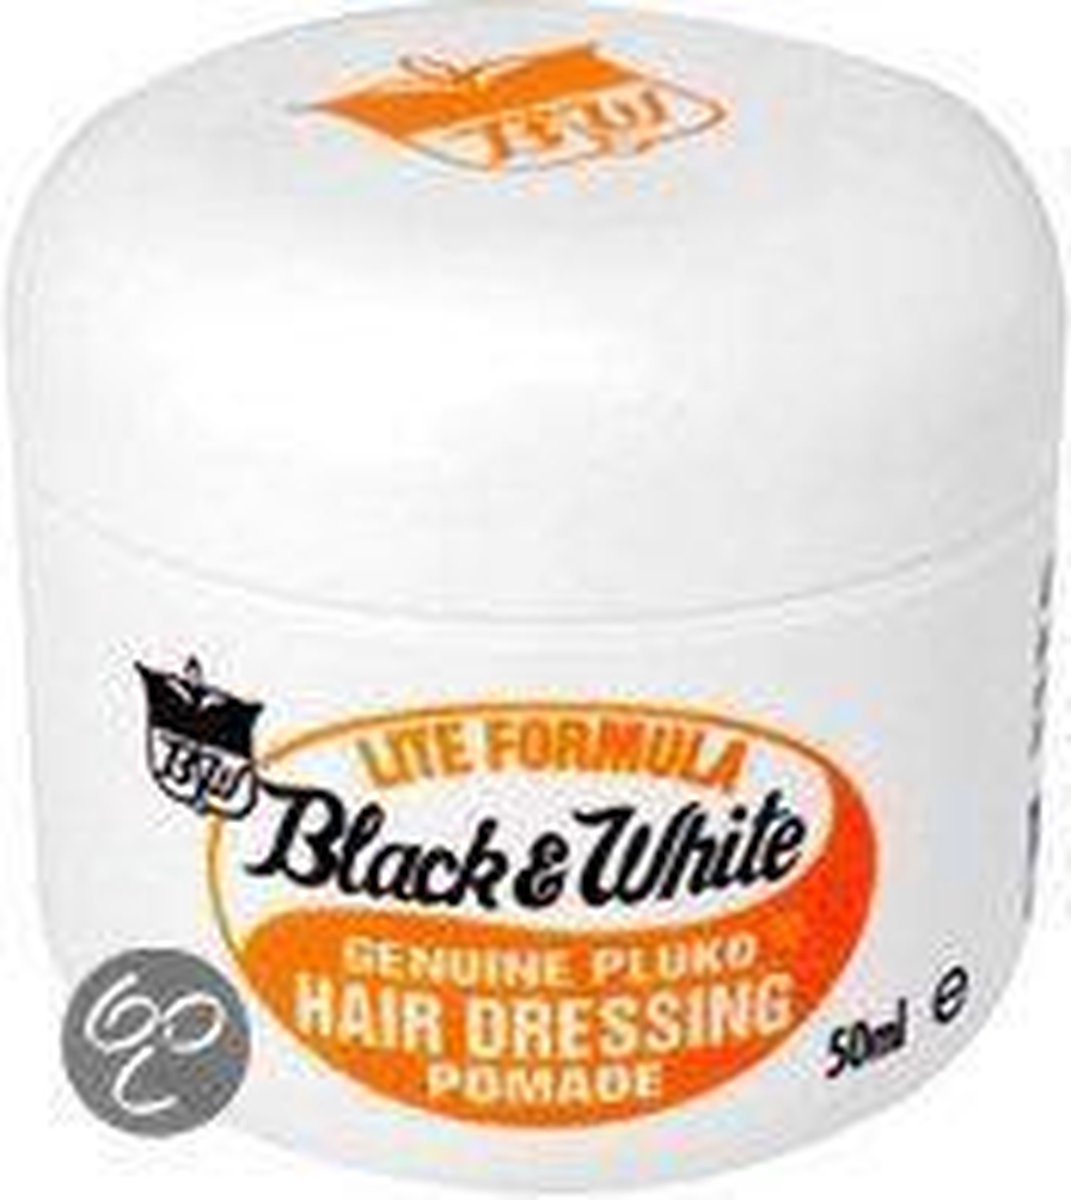 Black & White Hair Dresssing Pomade Lite 50mlWax